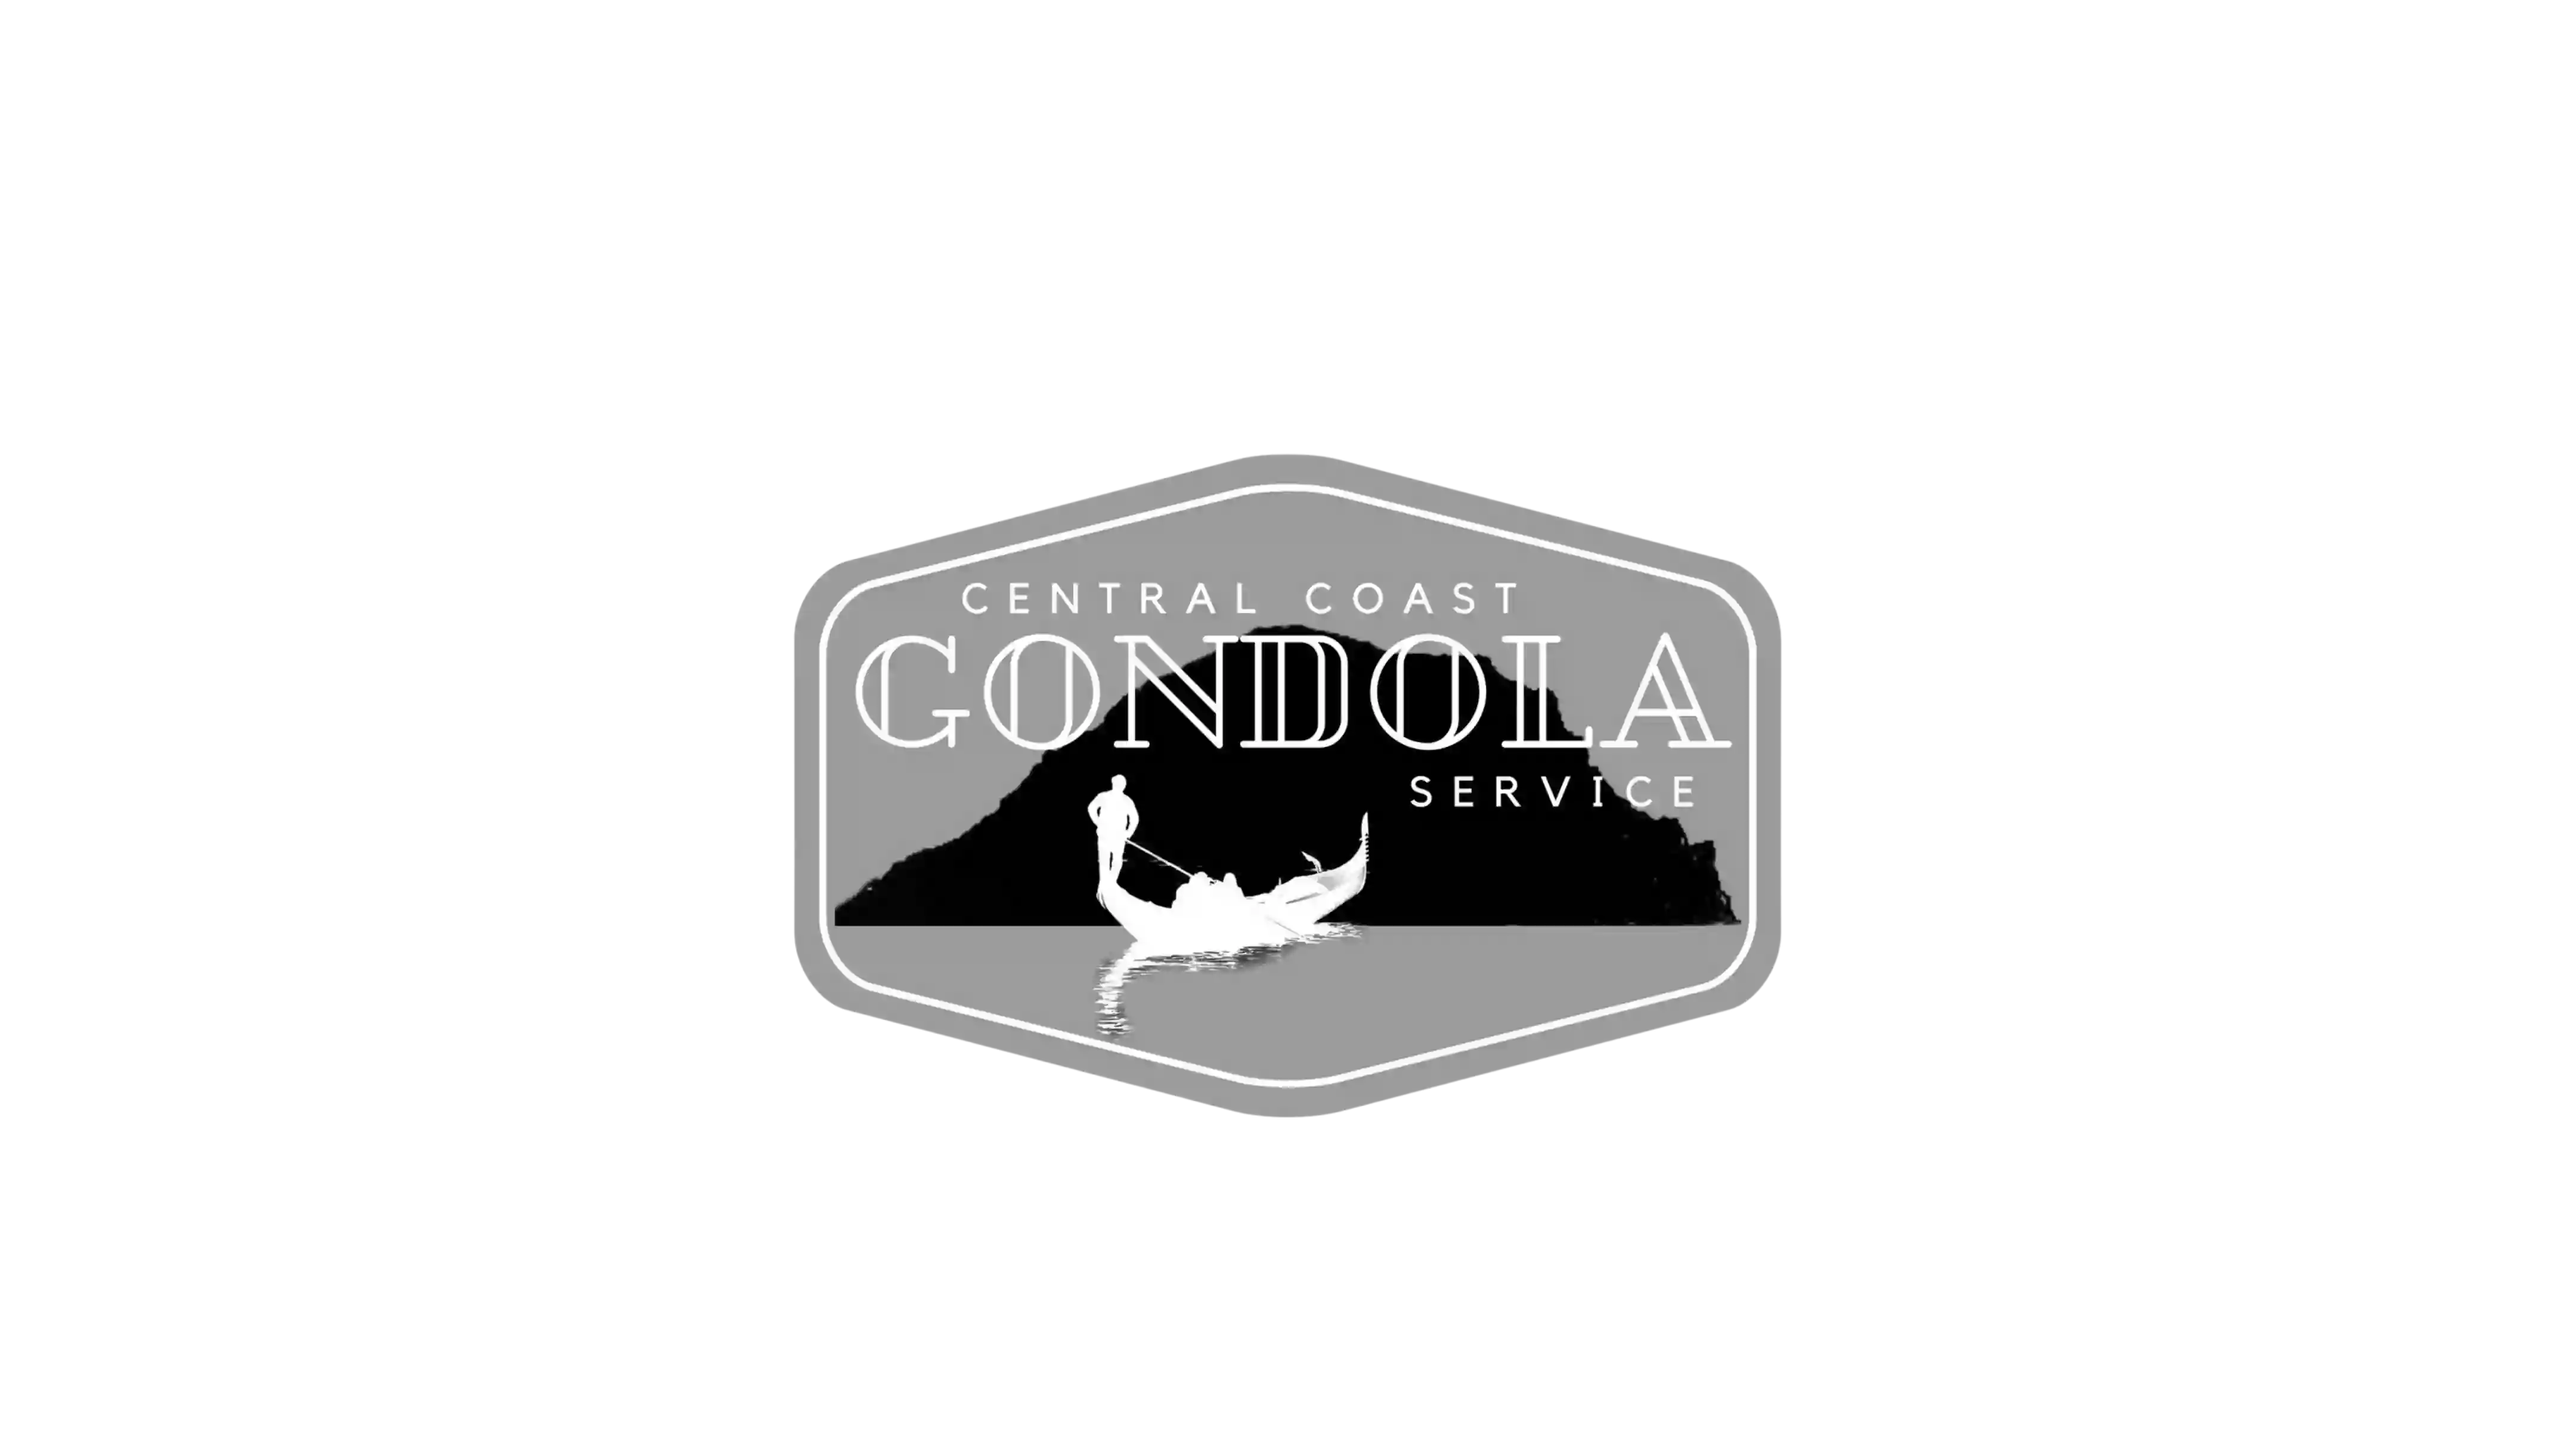 Central Coast Gondola